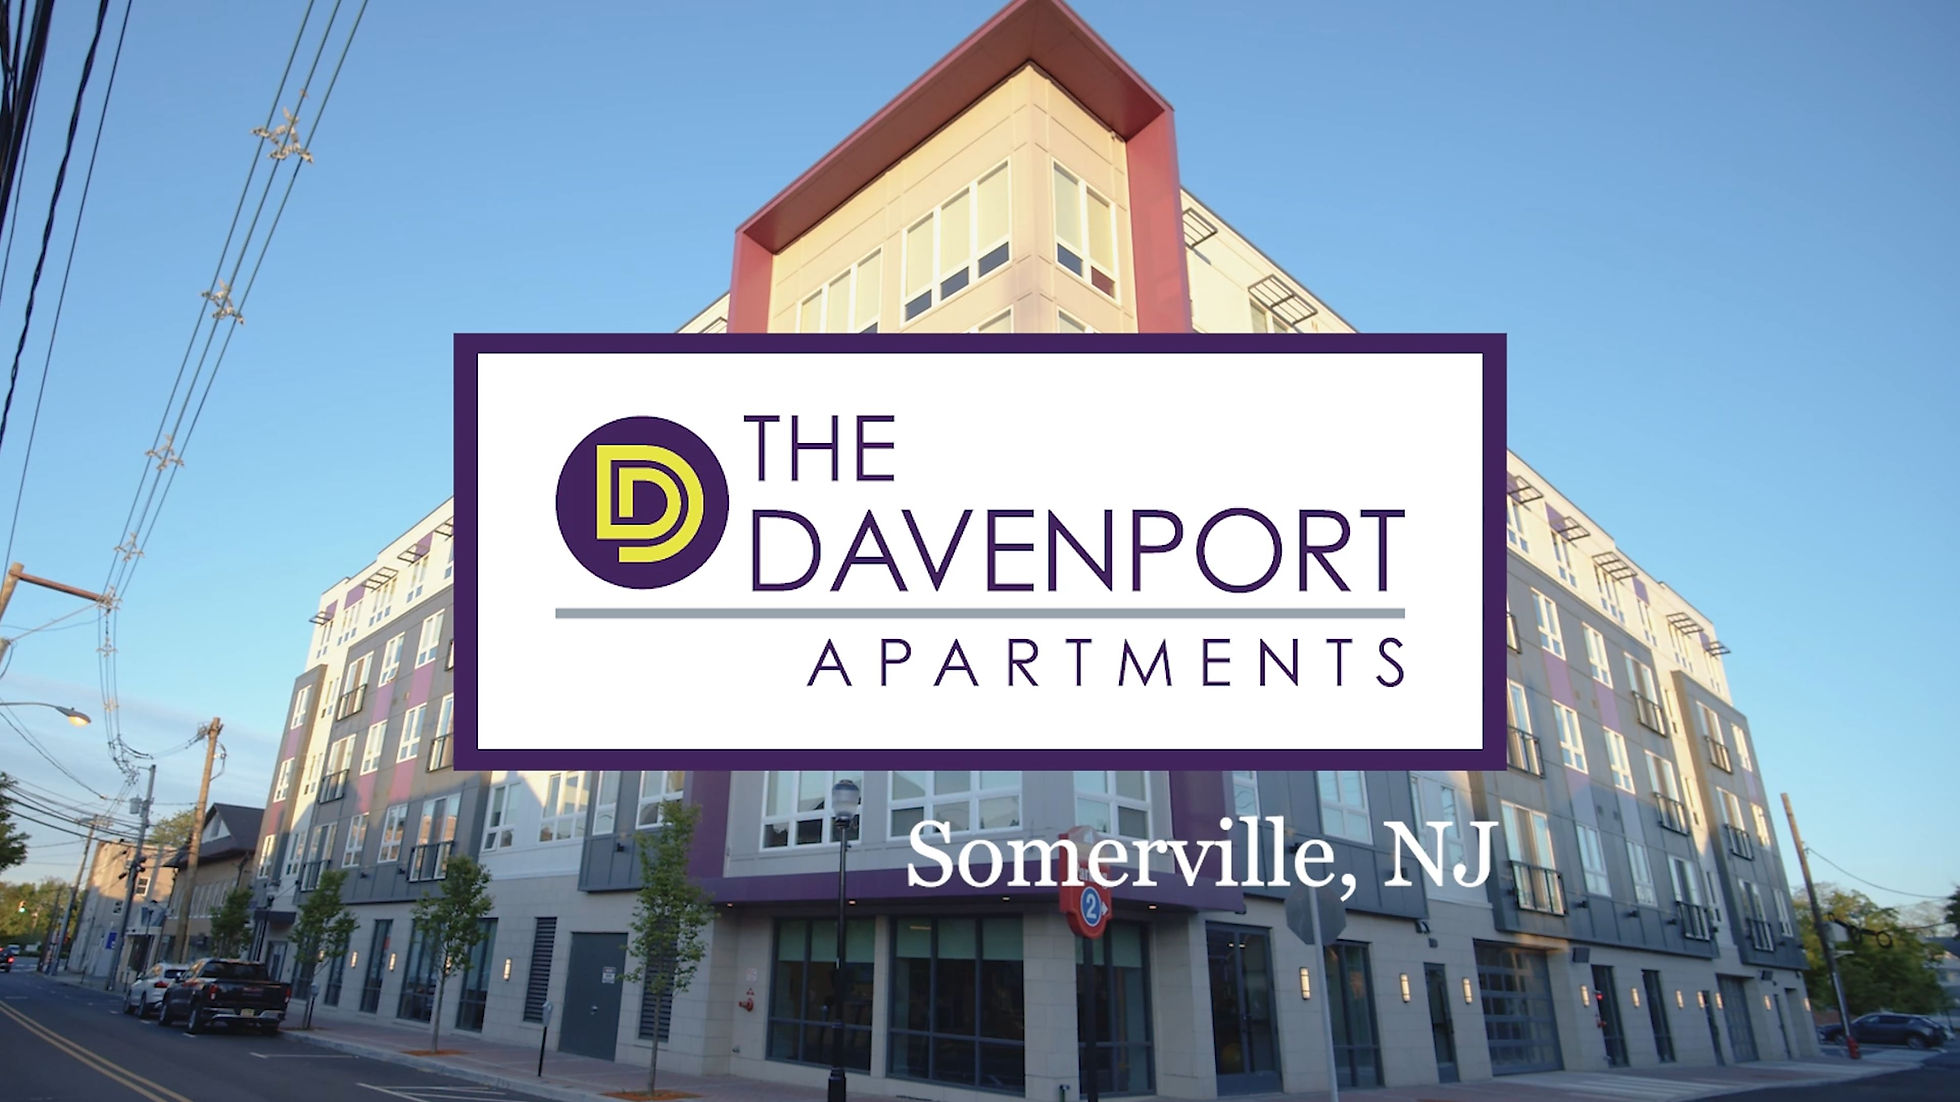 Davenport Apartments - Somerville, NJ -  Highlight Video